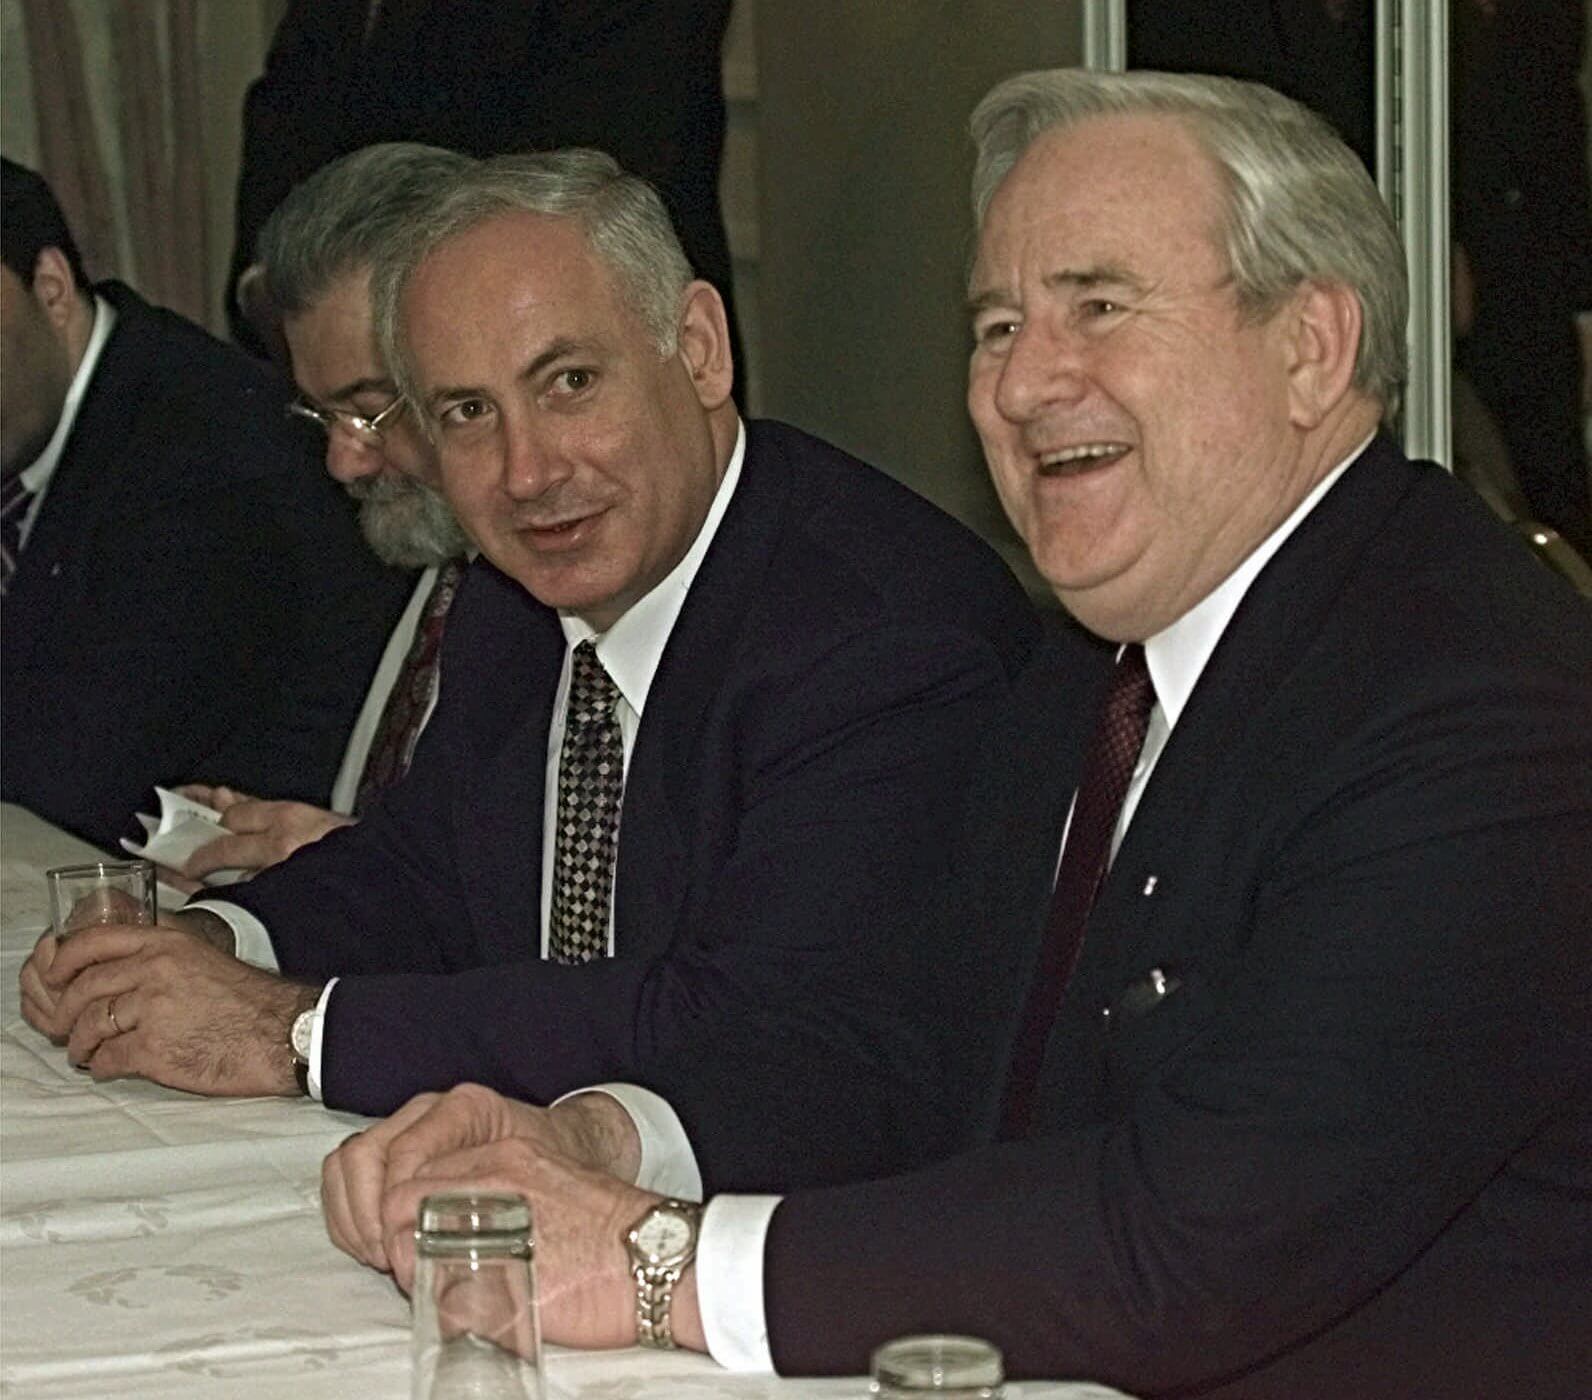 Falwell and Netanyahu